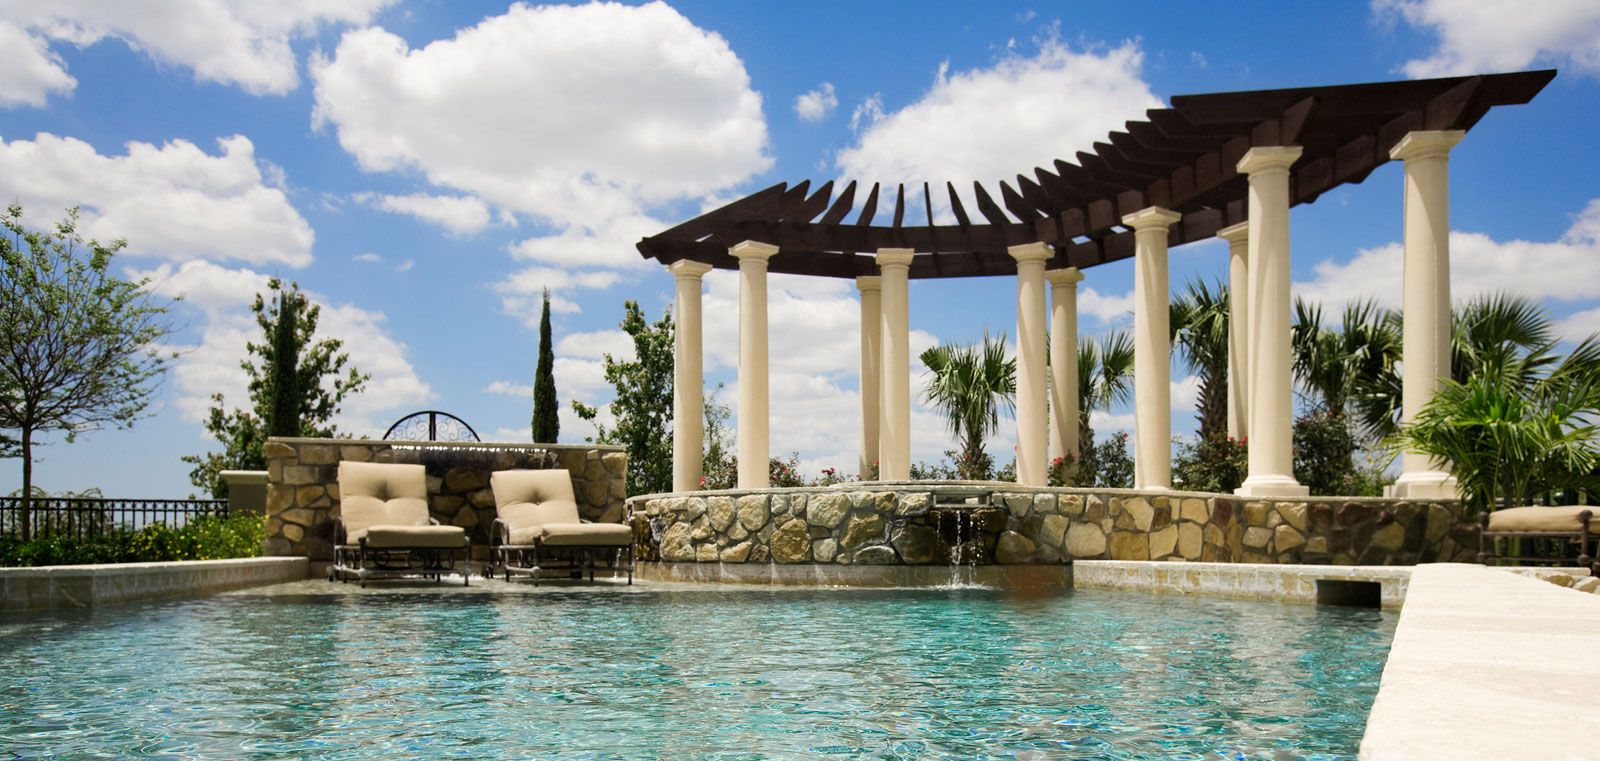 Luxury Backyard with Pool and Bench